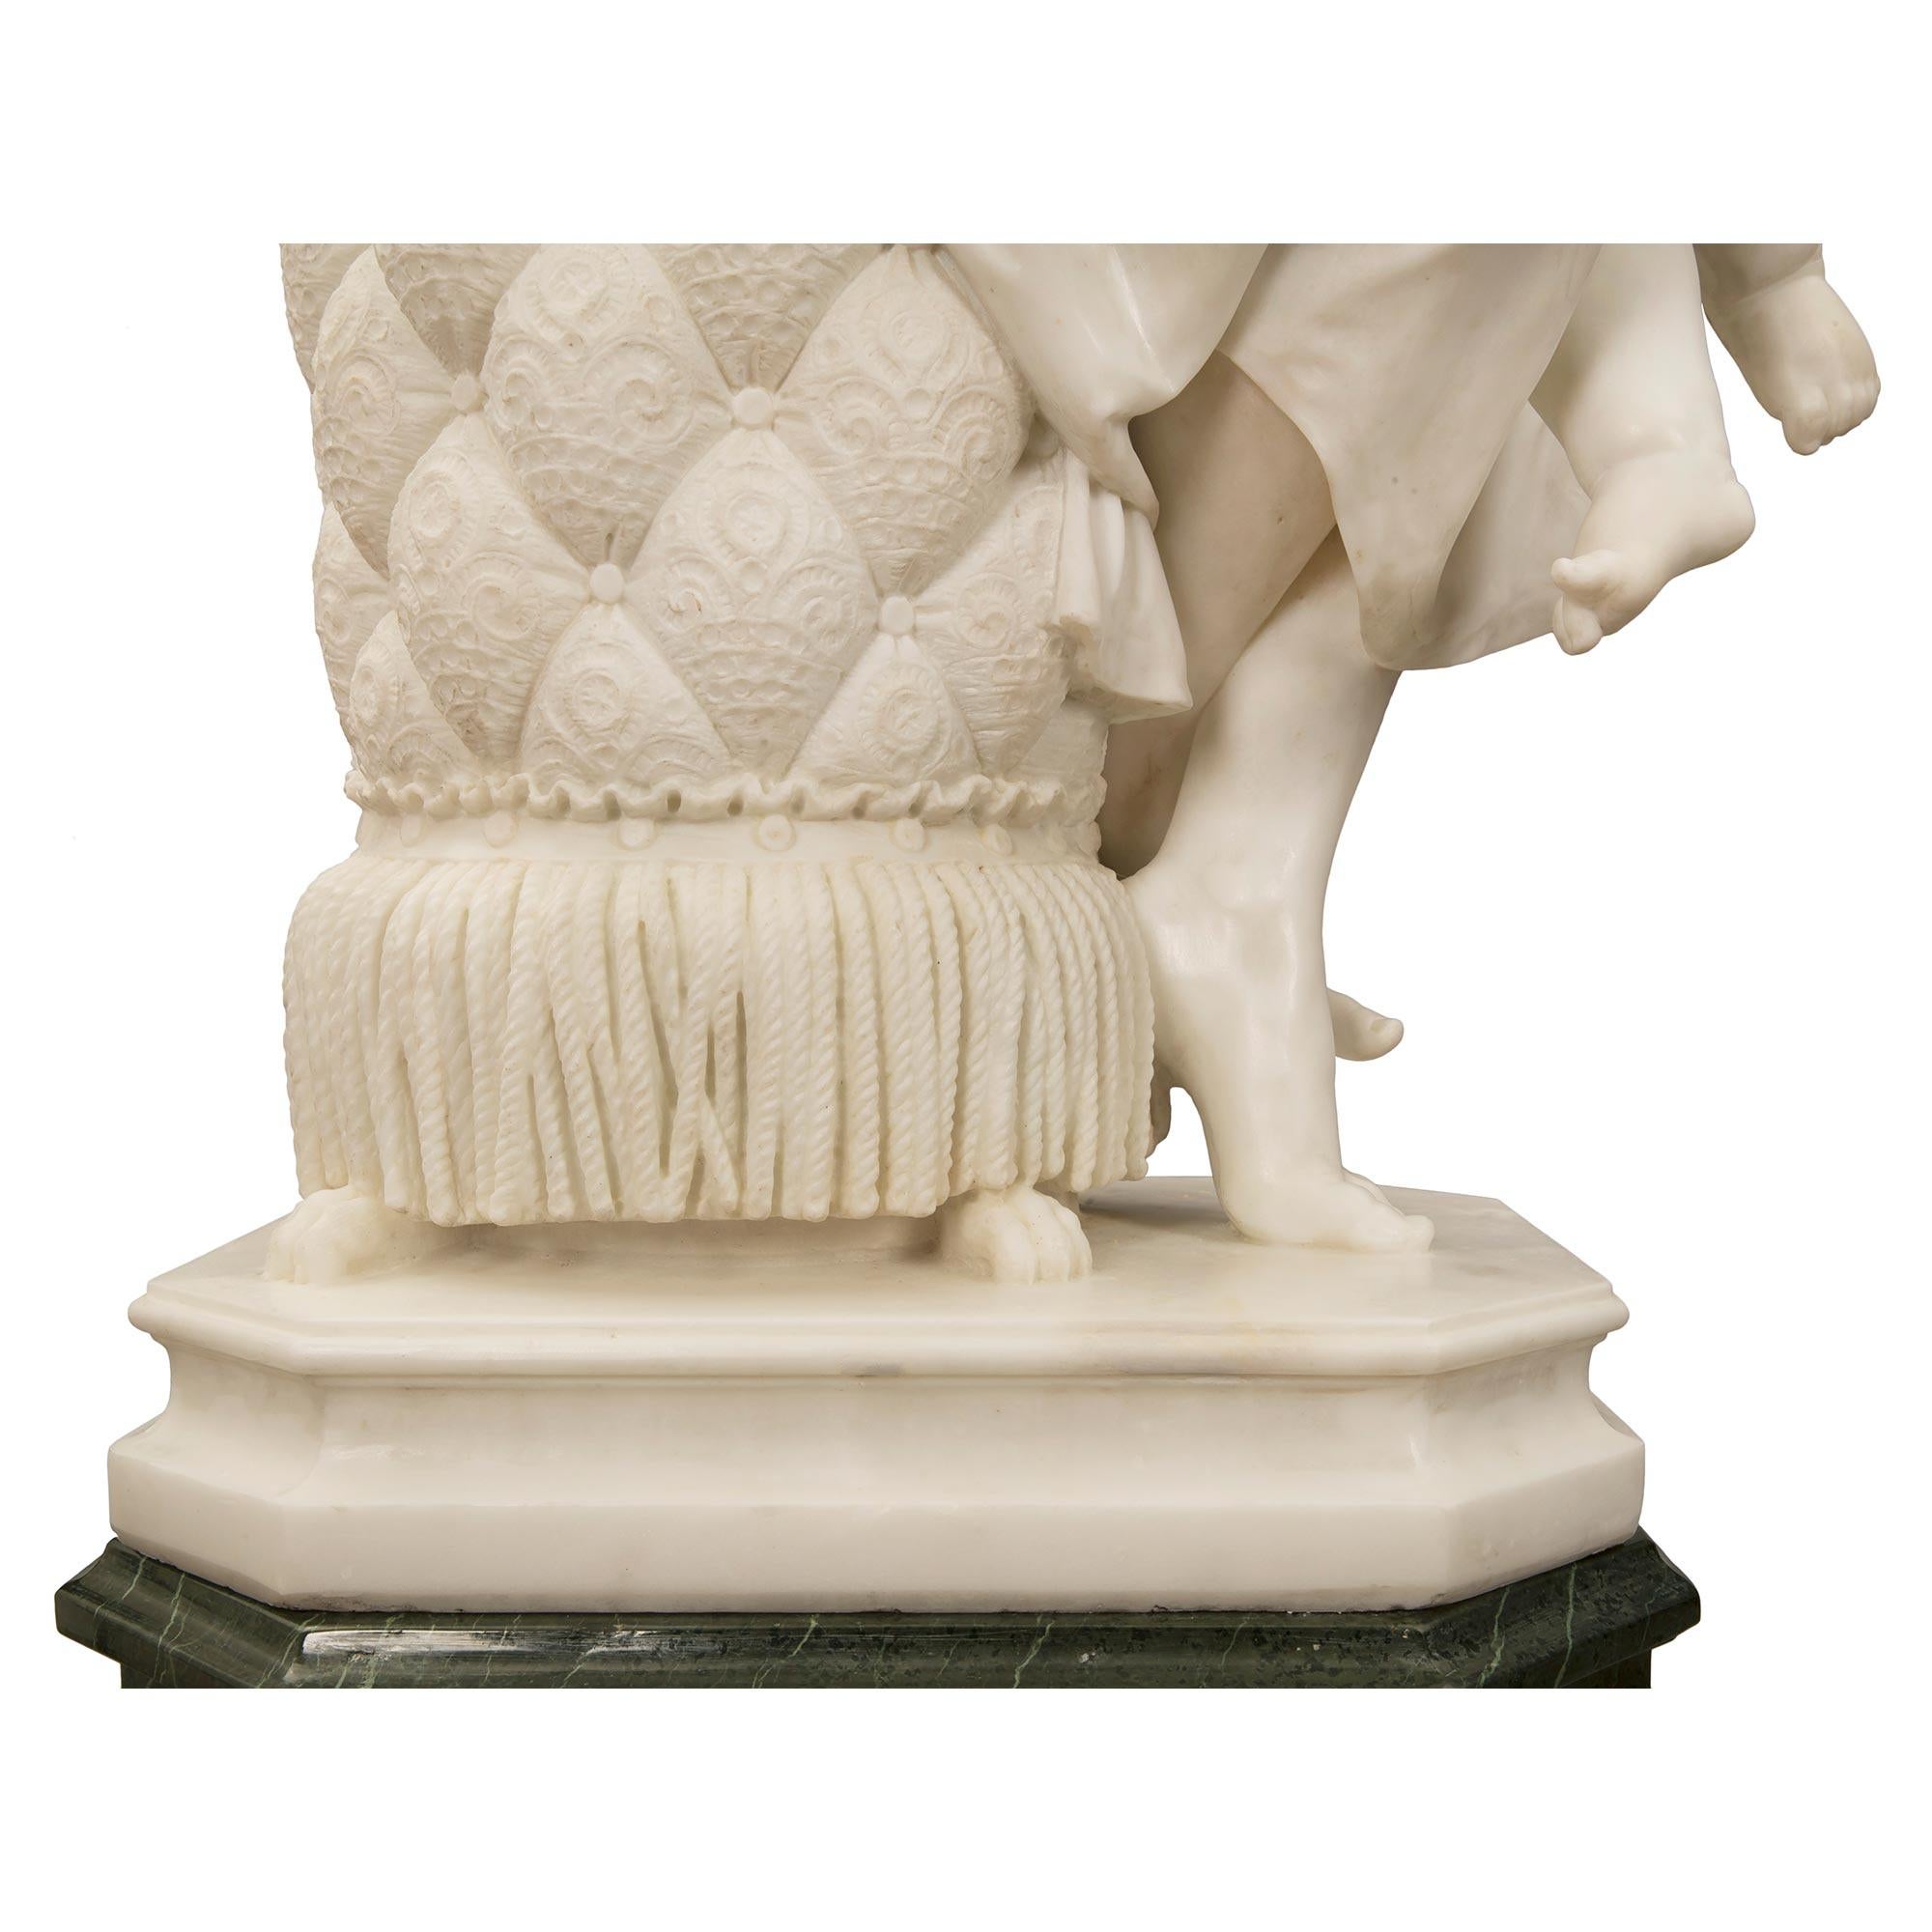 Italian 19th Century White Carrara Marble Statue on Its Original Swivel Pedestal For Sale 5